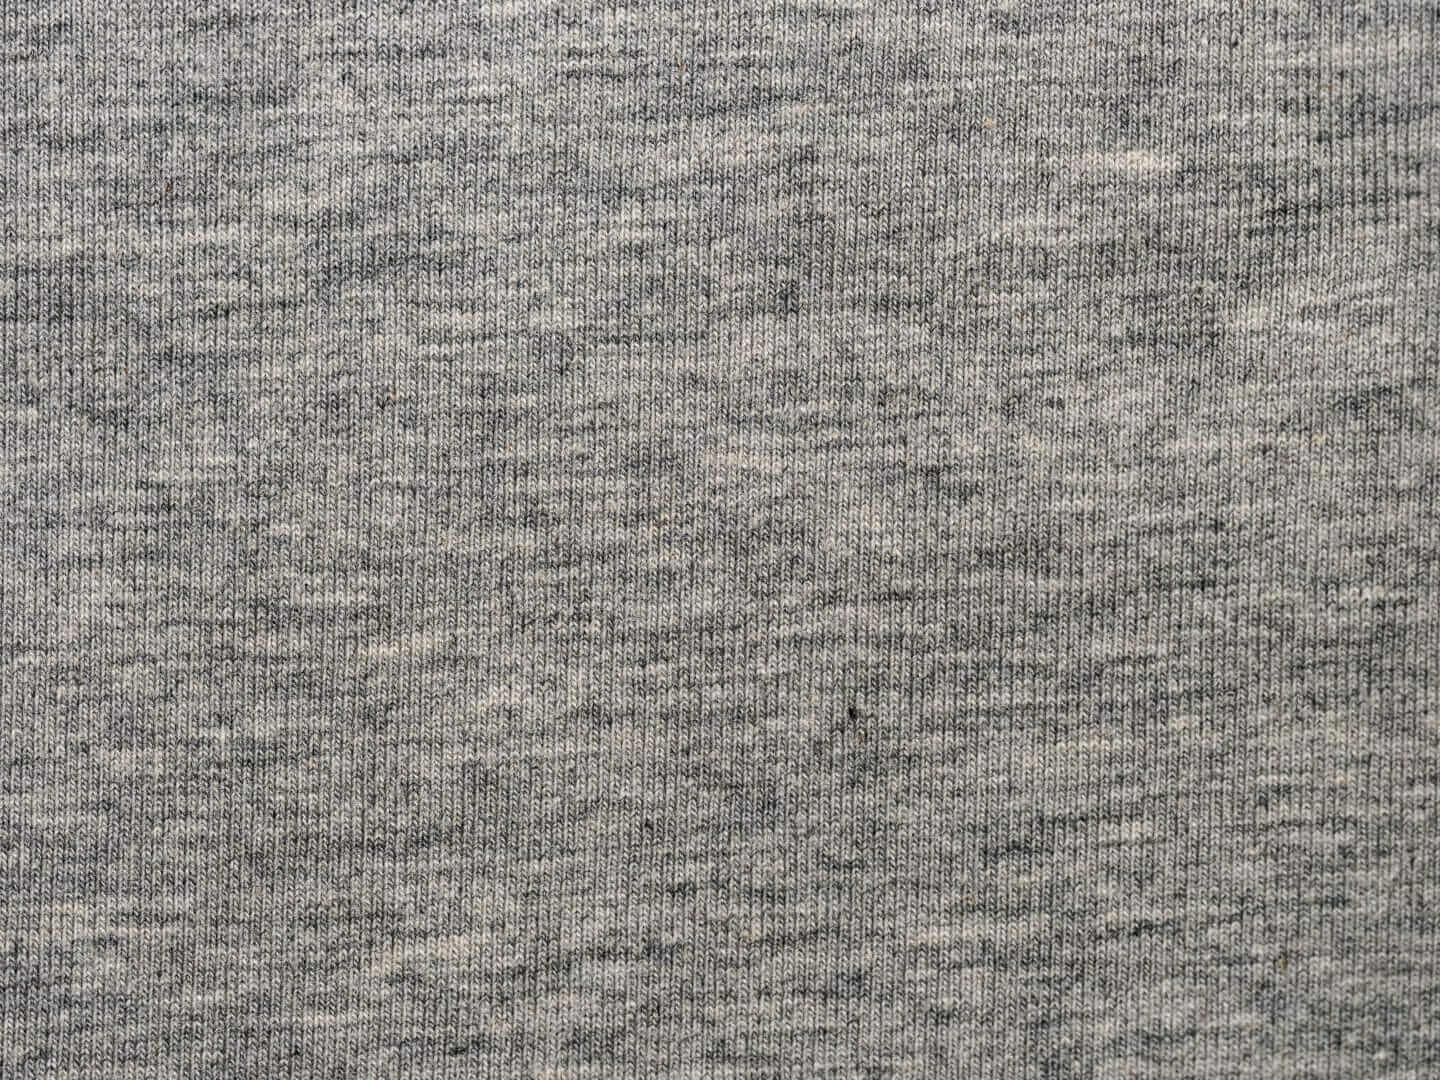 180gsm Grey Cotton Spandex Jersey Sportswear Manufacturing